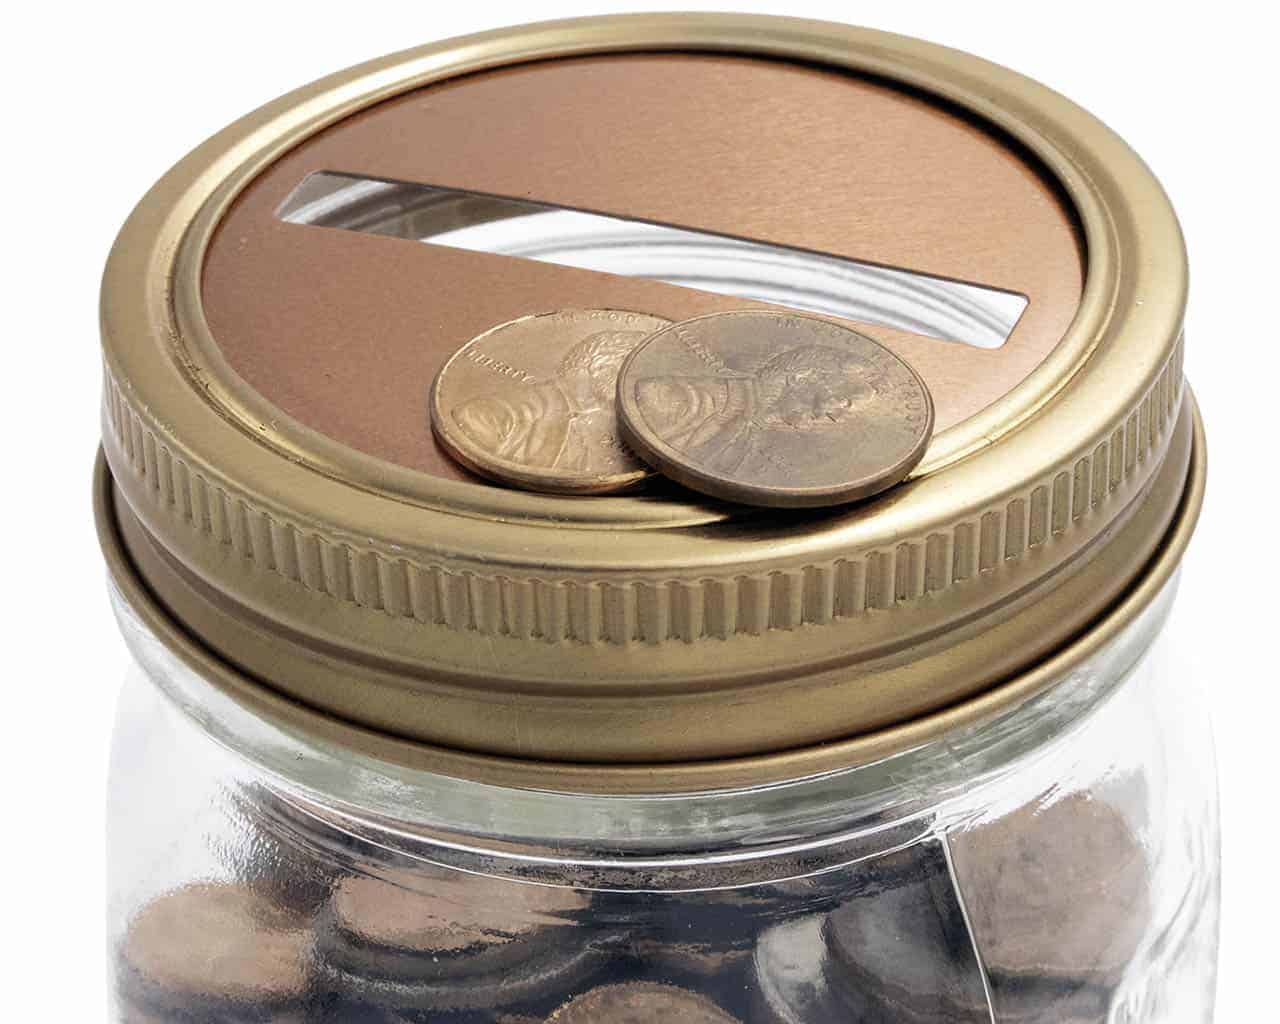 mason-jar-lifestyle-copper-coin-slot-bank-lid-insert-copper-band-regular-mouth-ball-mason-jar-pennies